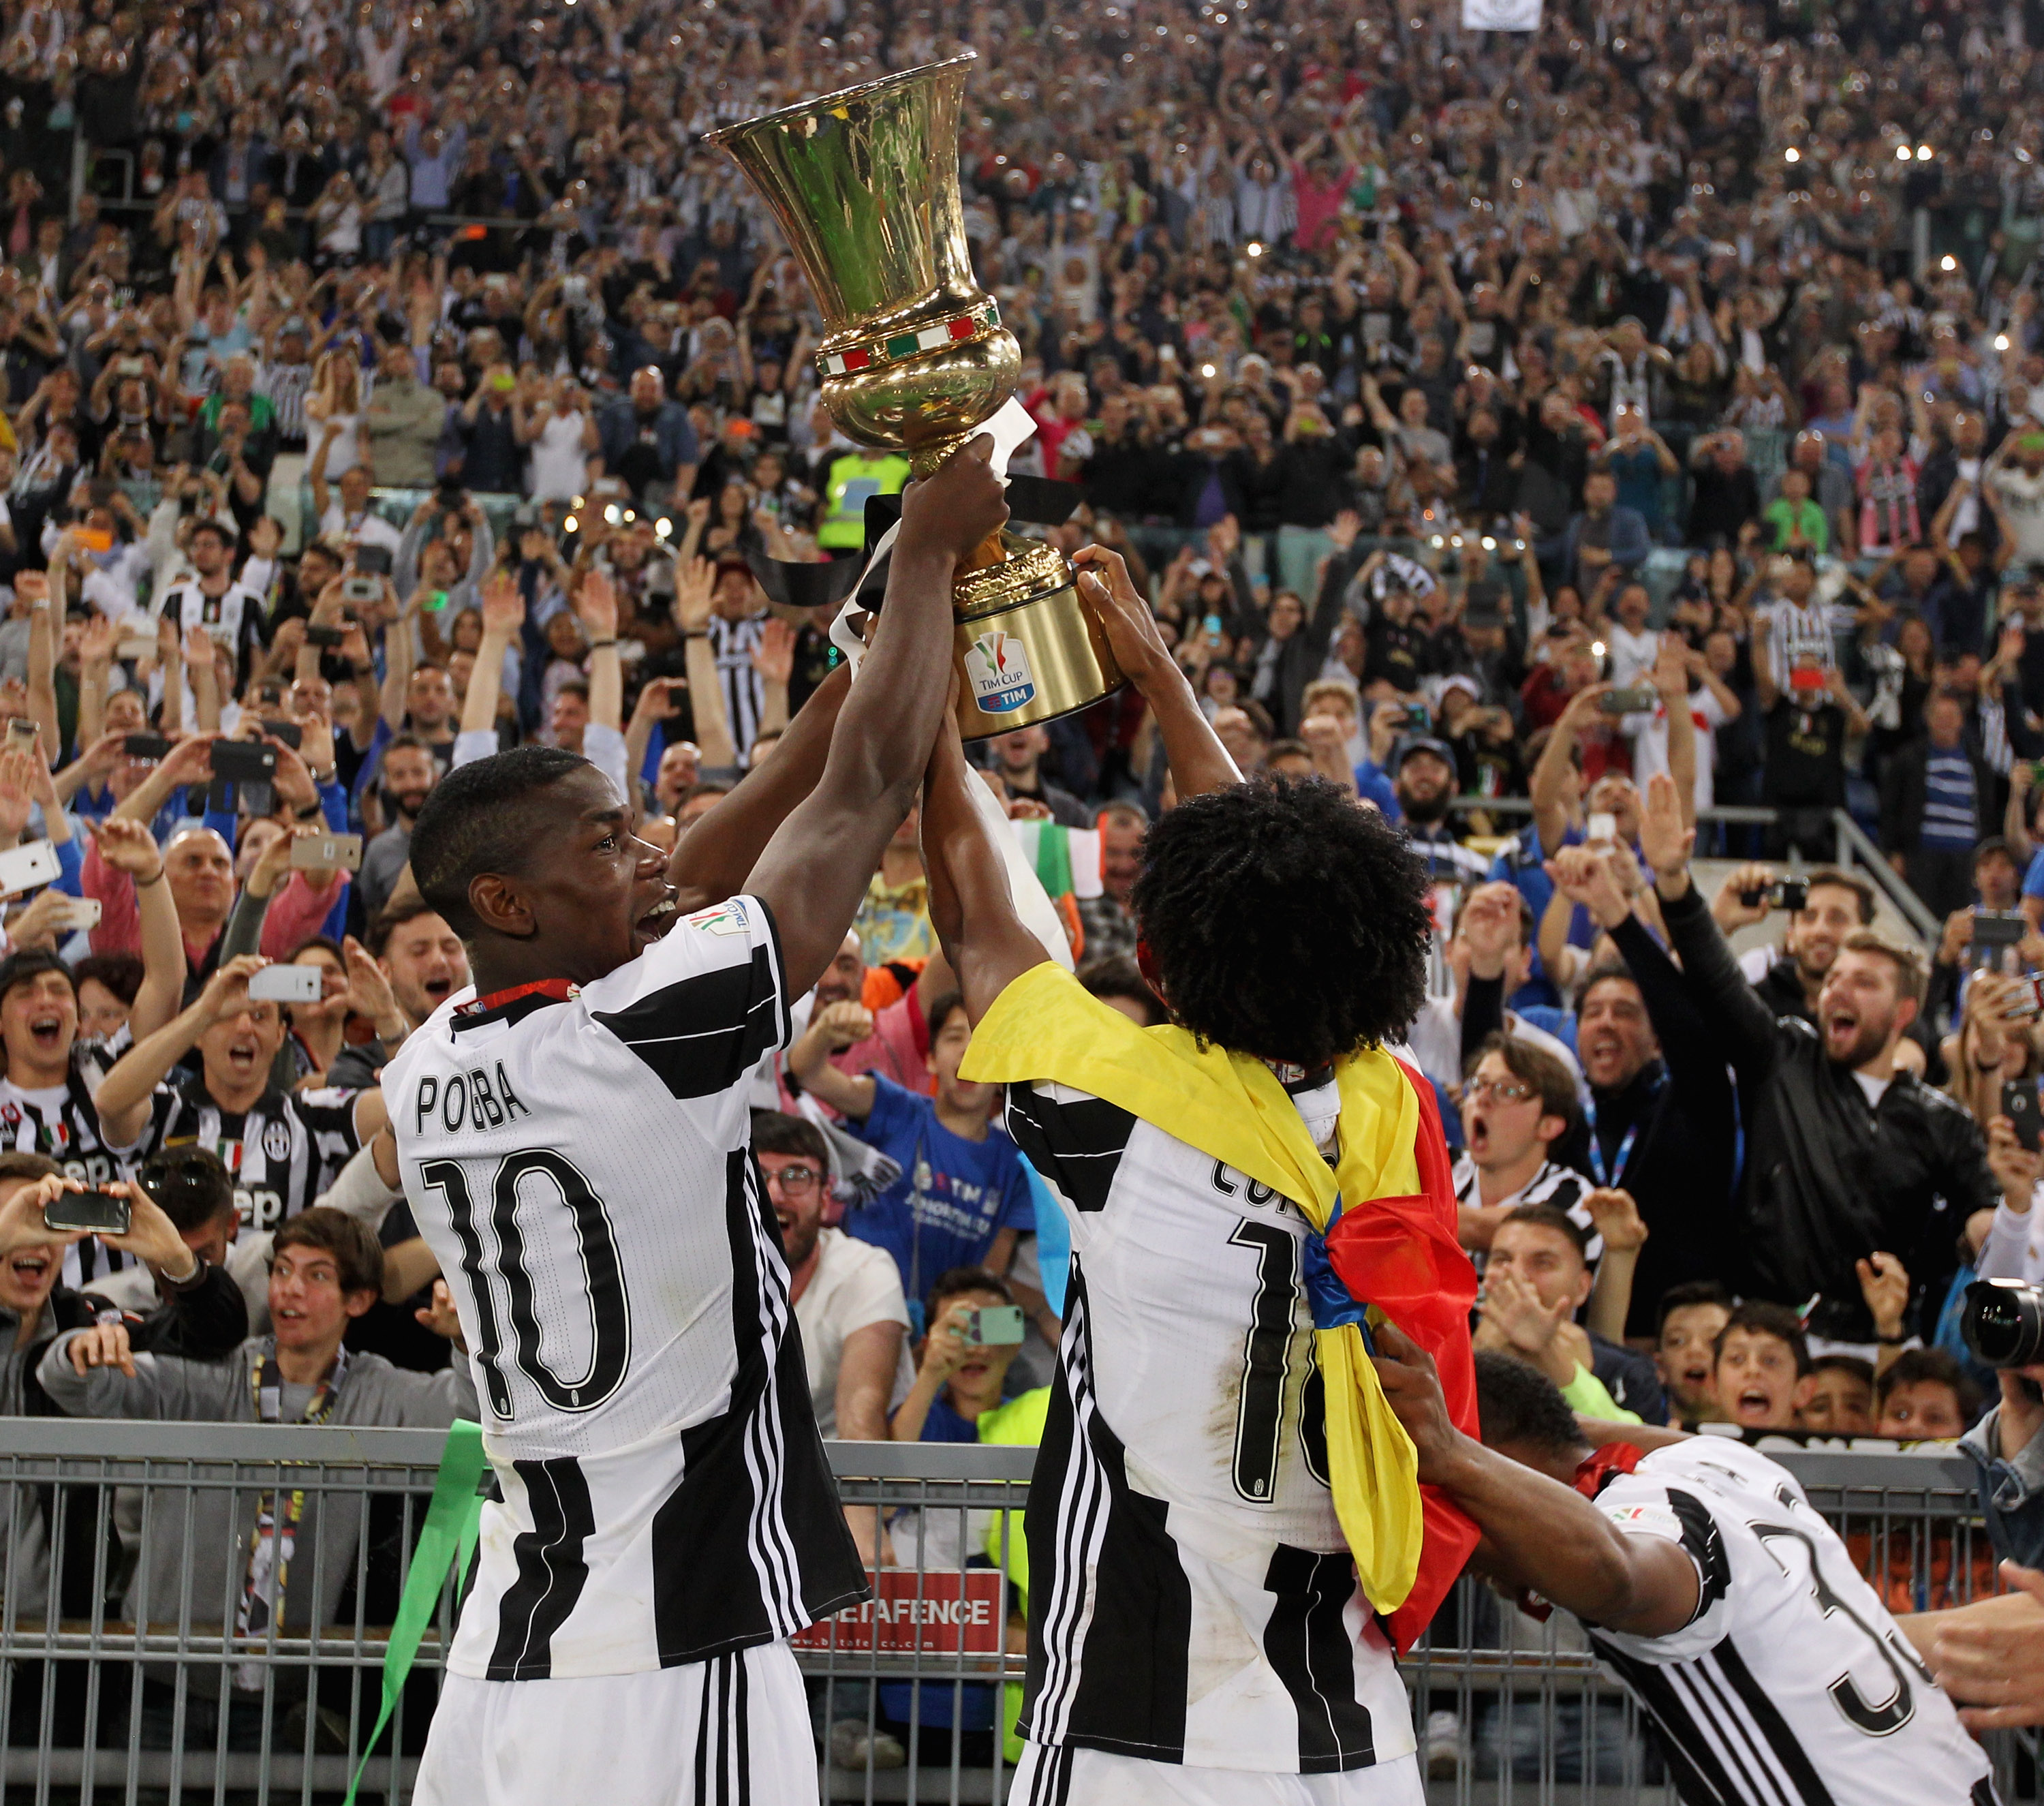 Coppa Italia Final - AC Milan 0-1 Juventus - | Juvefc.com